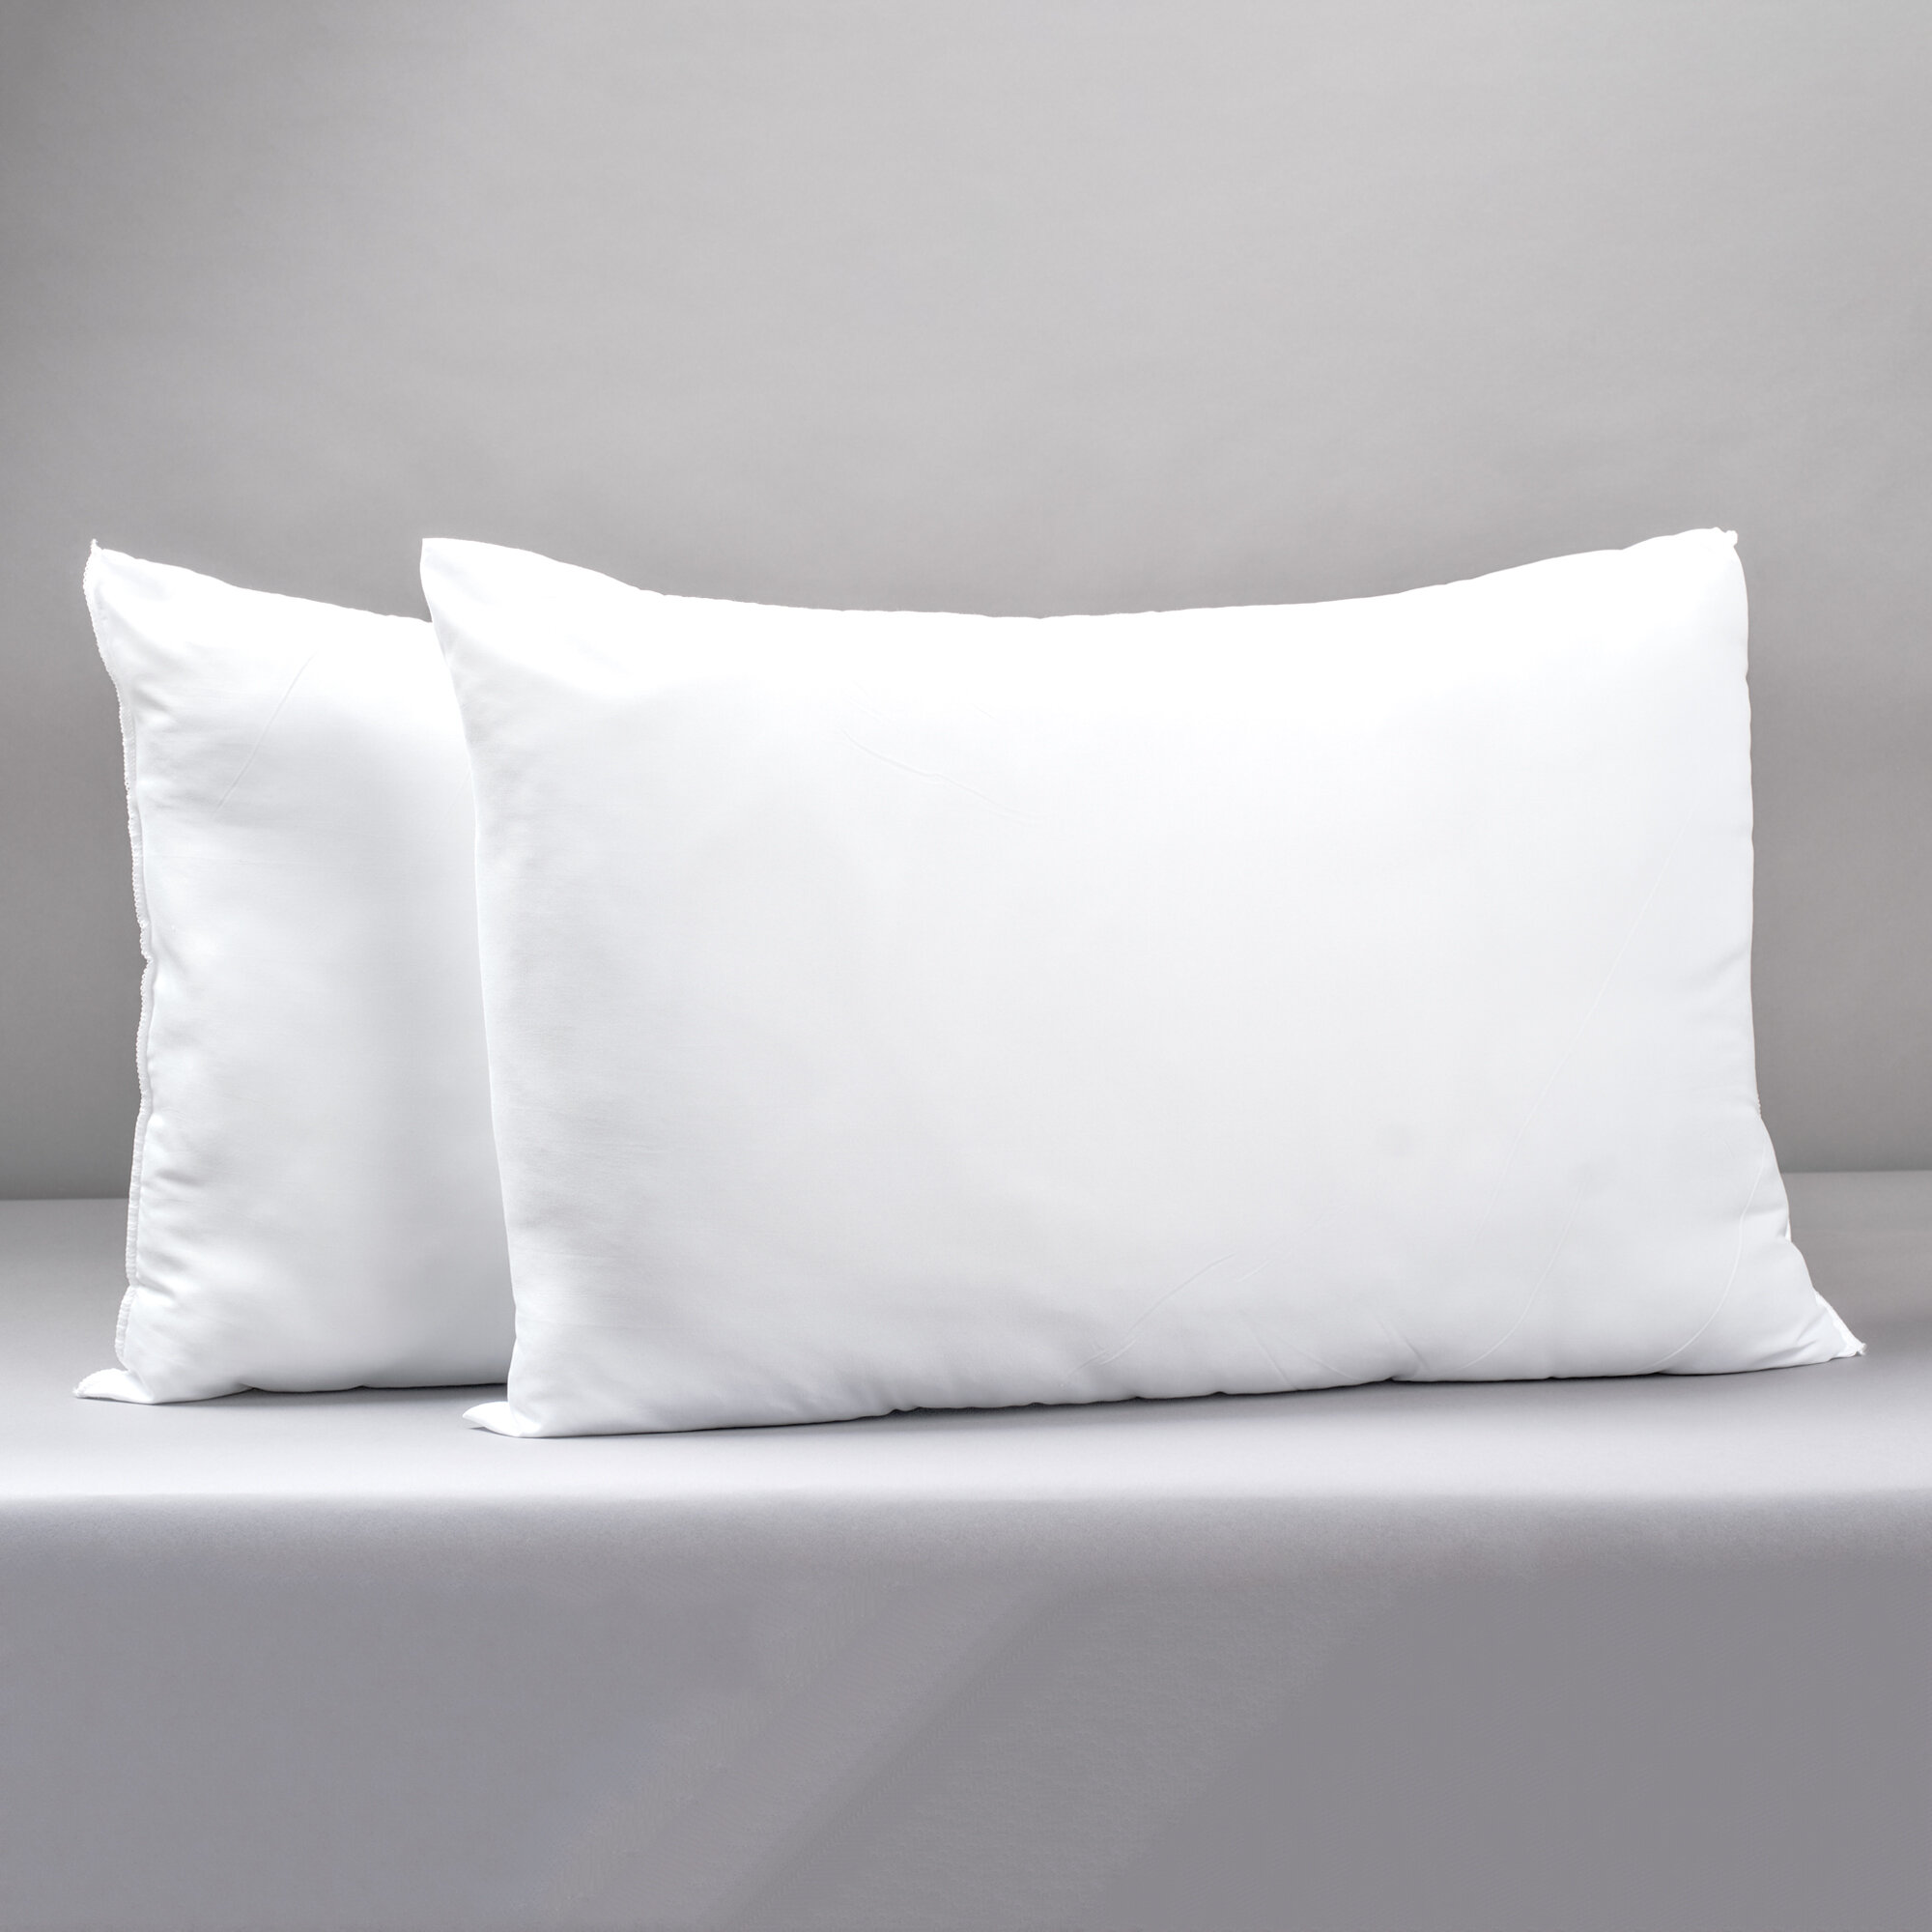 firm hypoallergenic pillows